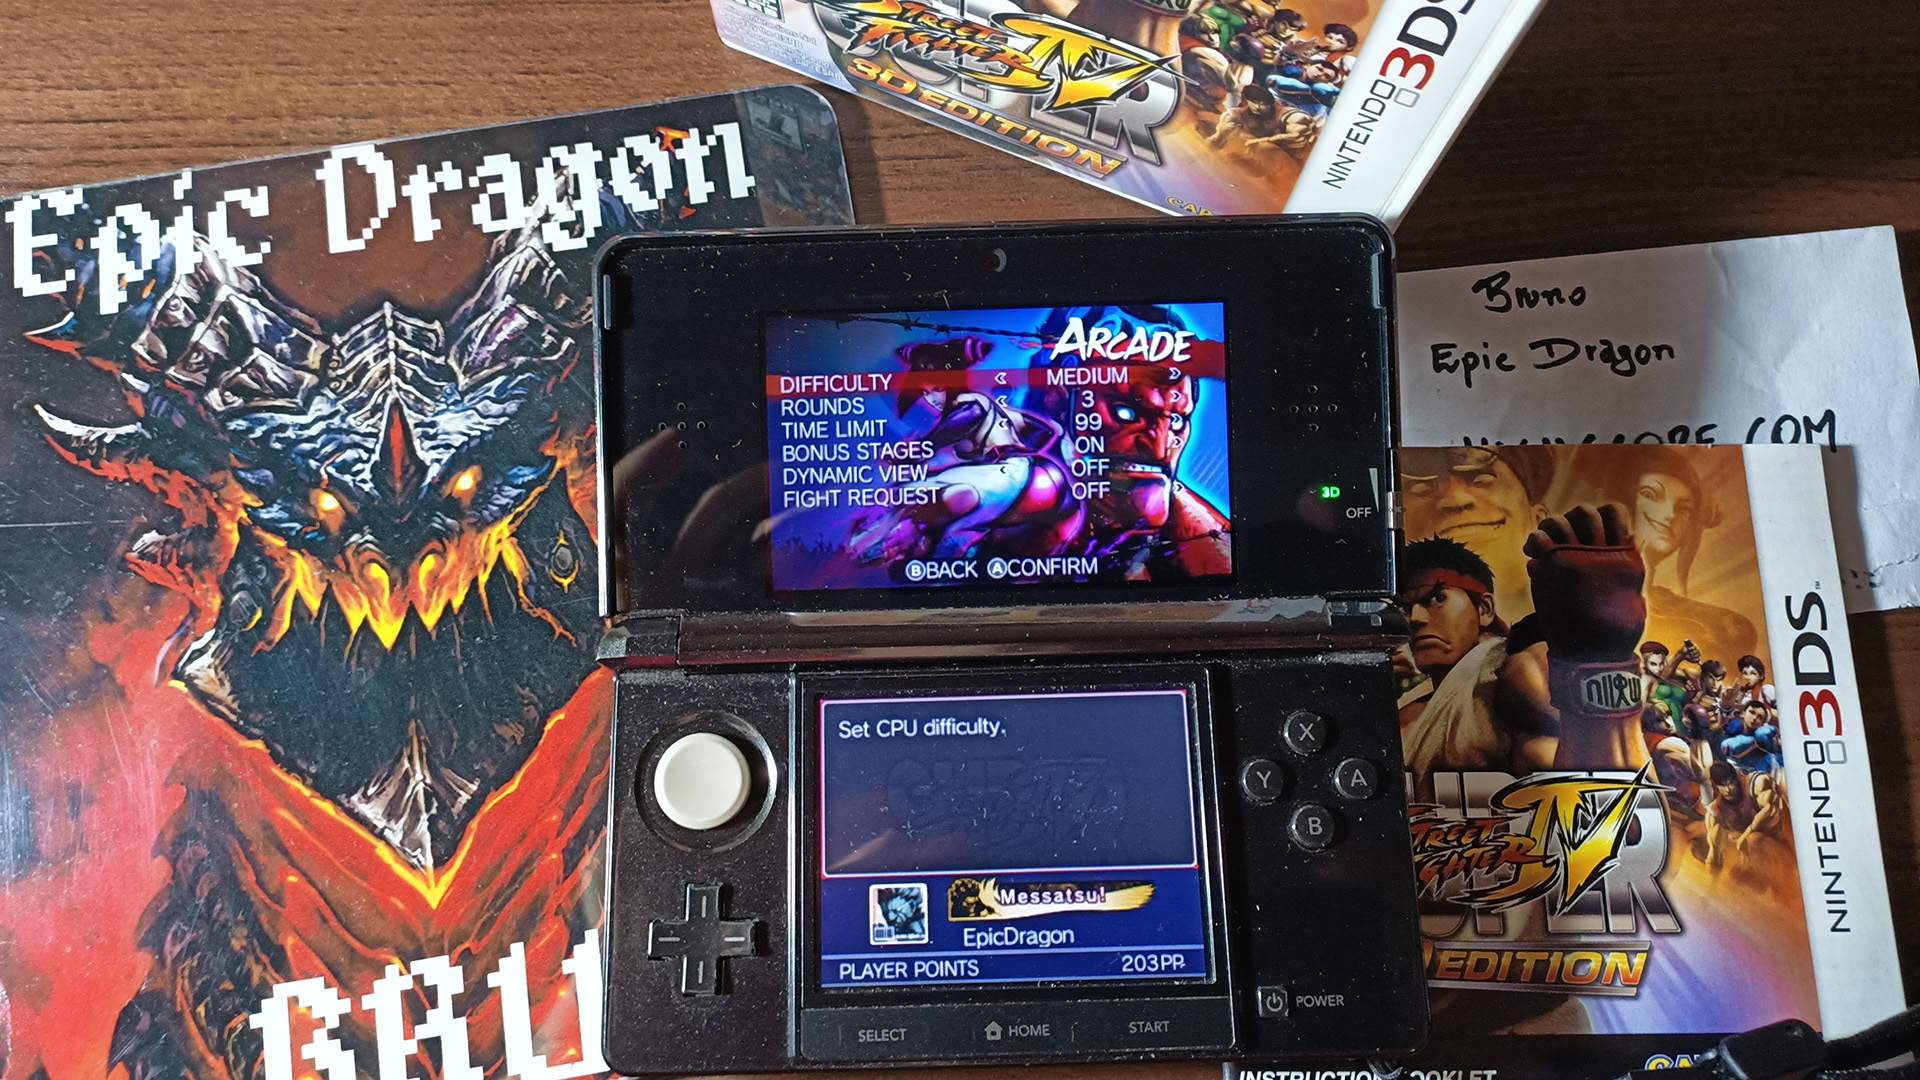 EpicDragon: Super Street Fighter IV 3D Edition: Arcade: Ken (Nintendo 3DS) 644,700 points on 2022-08-08 21:36:46